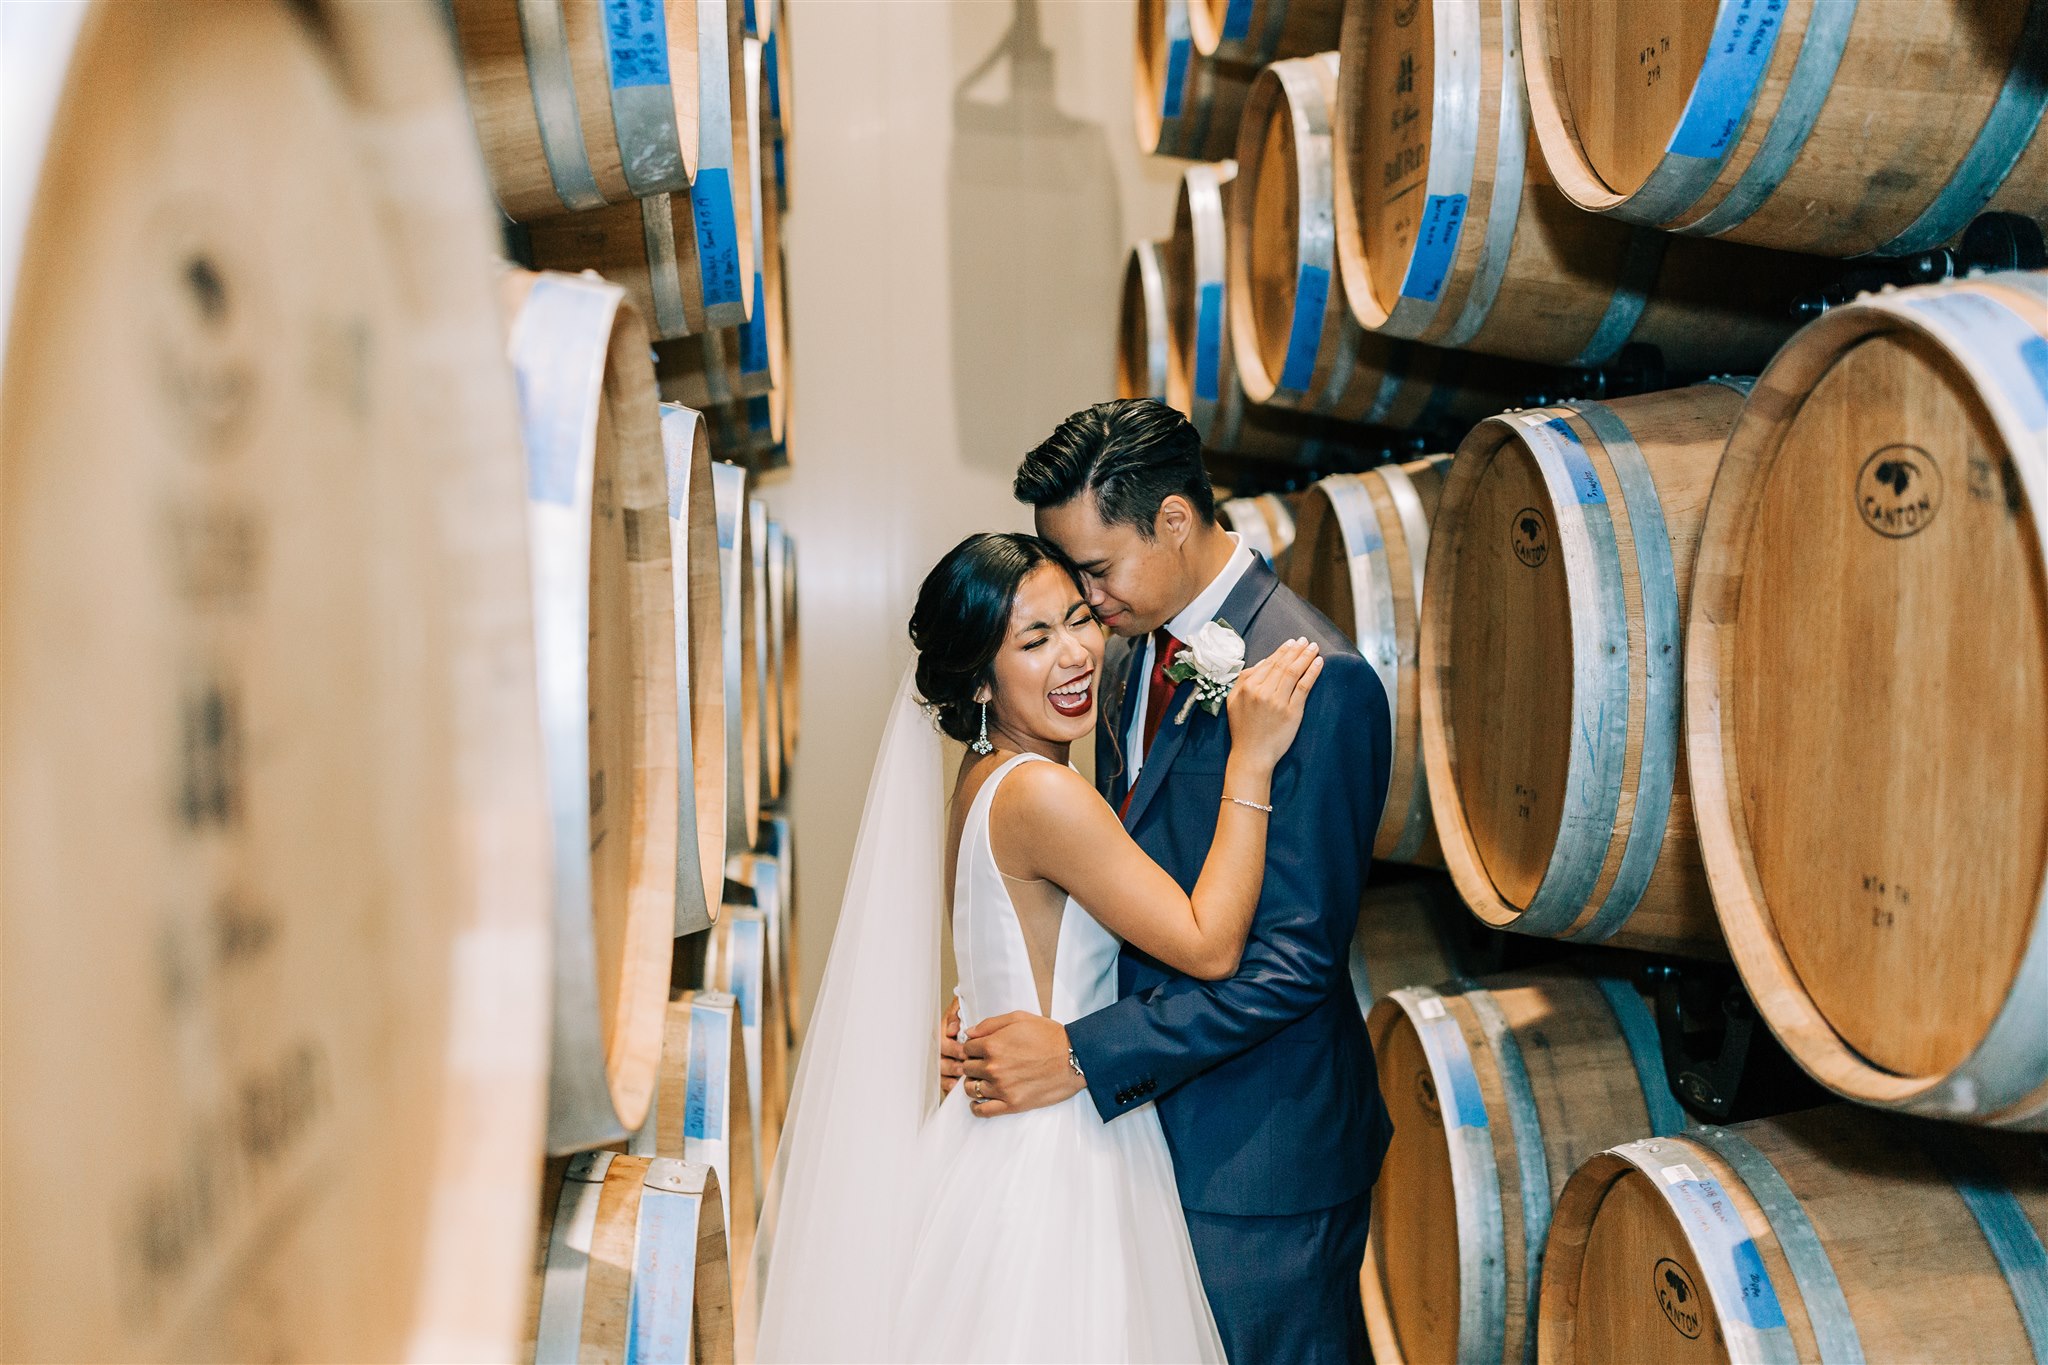 newlyweds kiss among barrels in VA winery